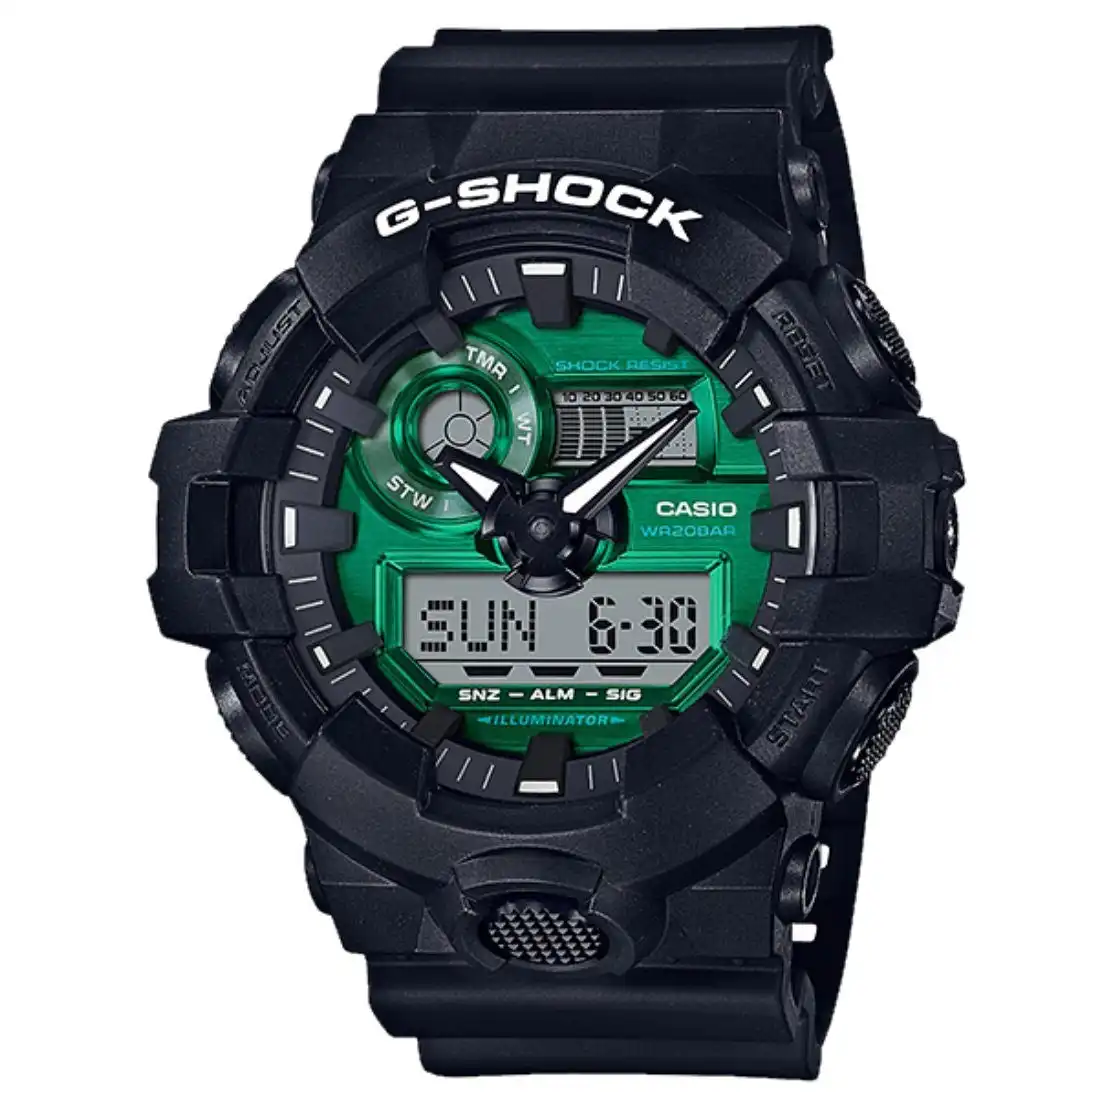 Casio G Shock Black and Green Men's Watch GA-700MG-1ADR